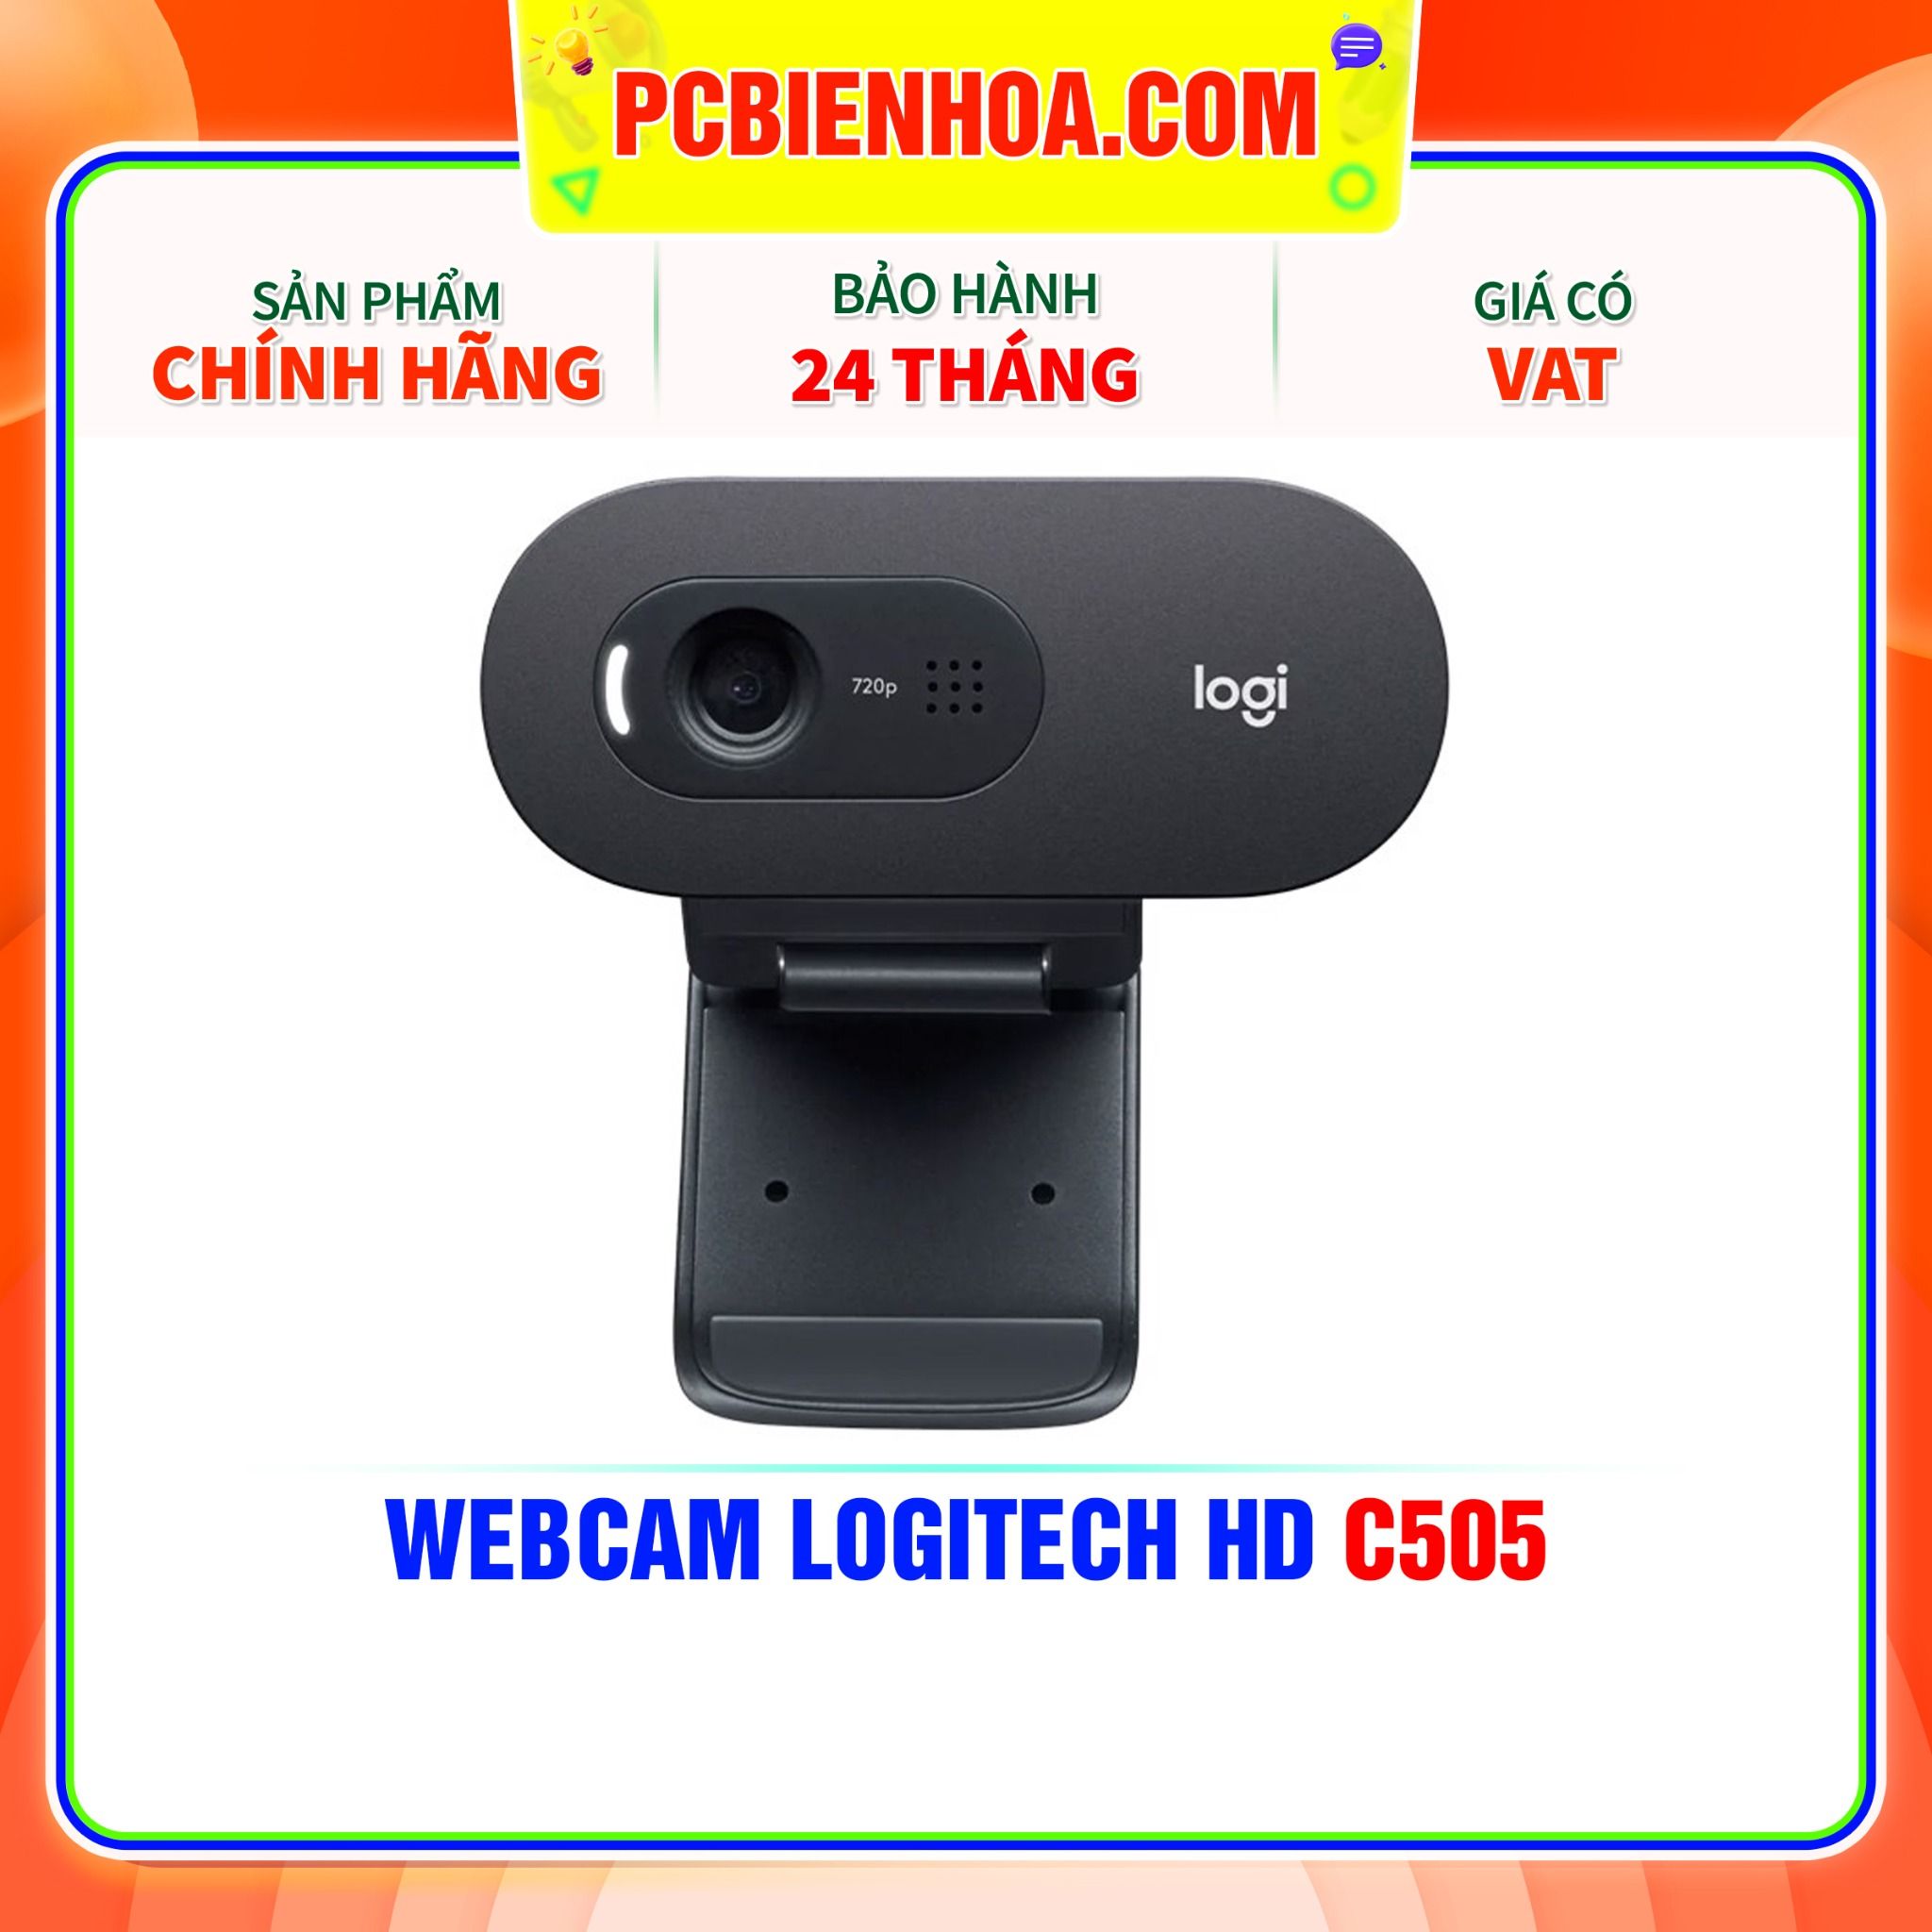  WEBCAM LOGITECH HD C505 